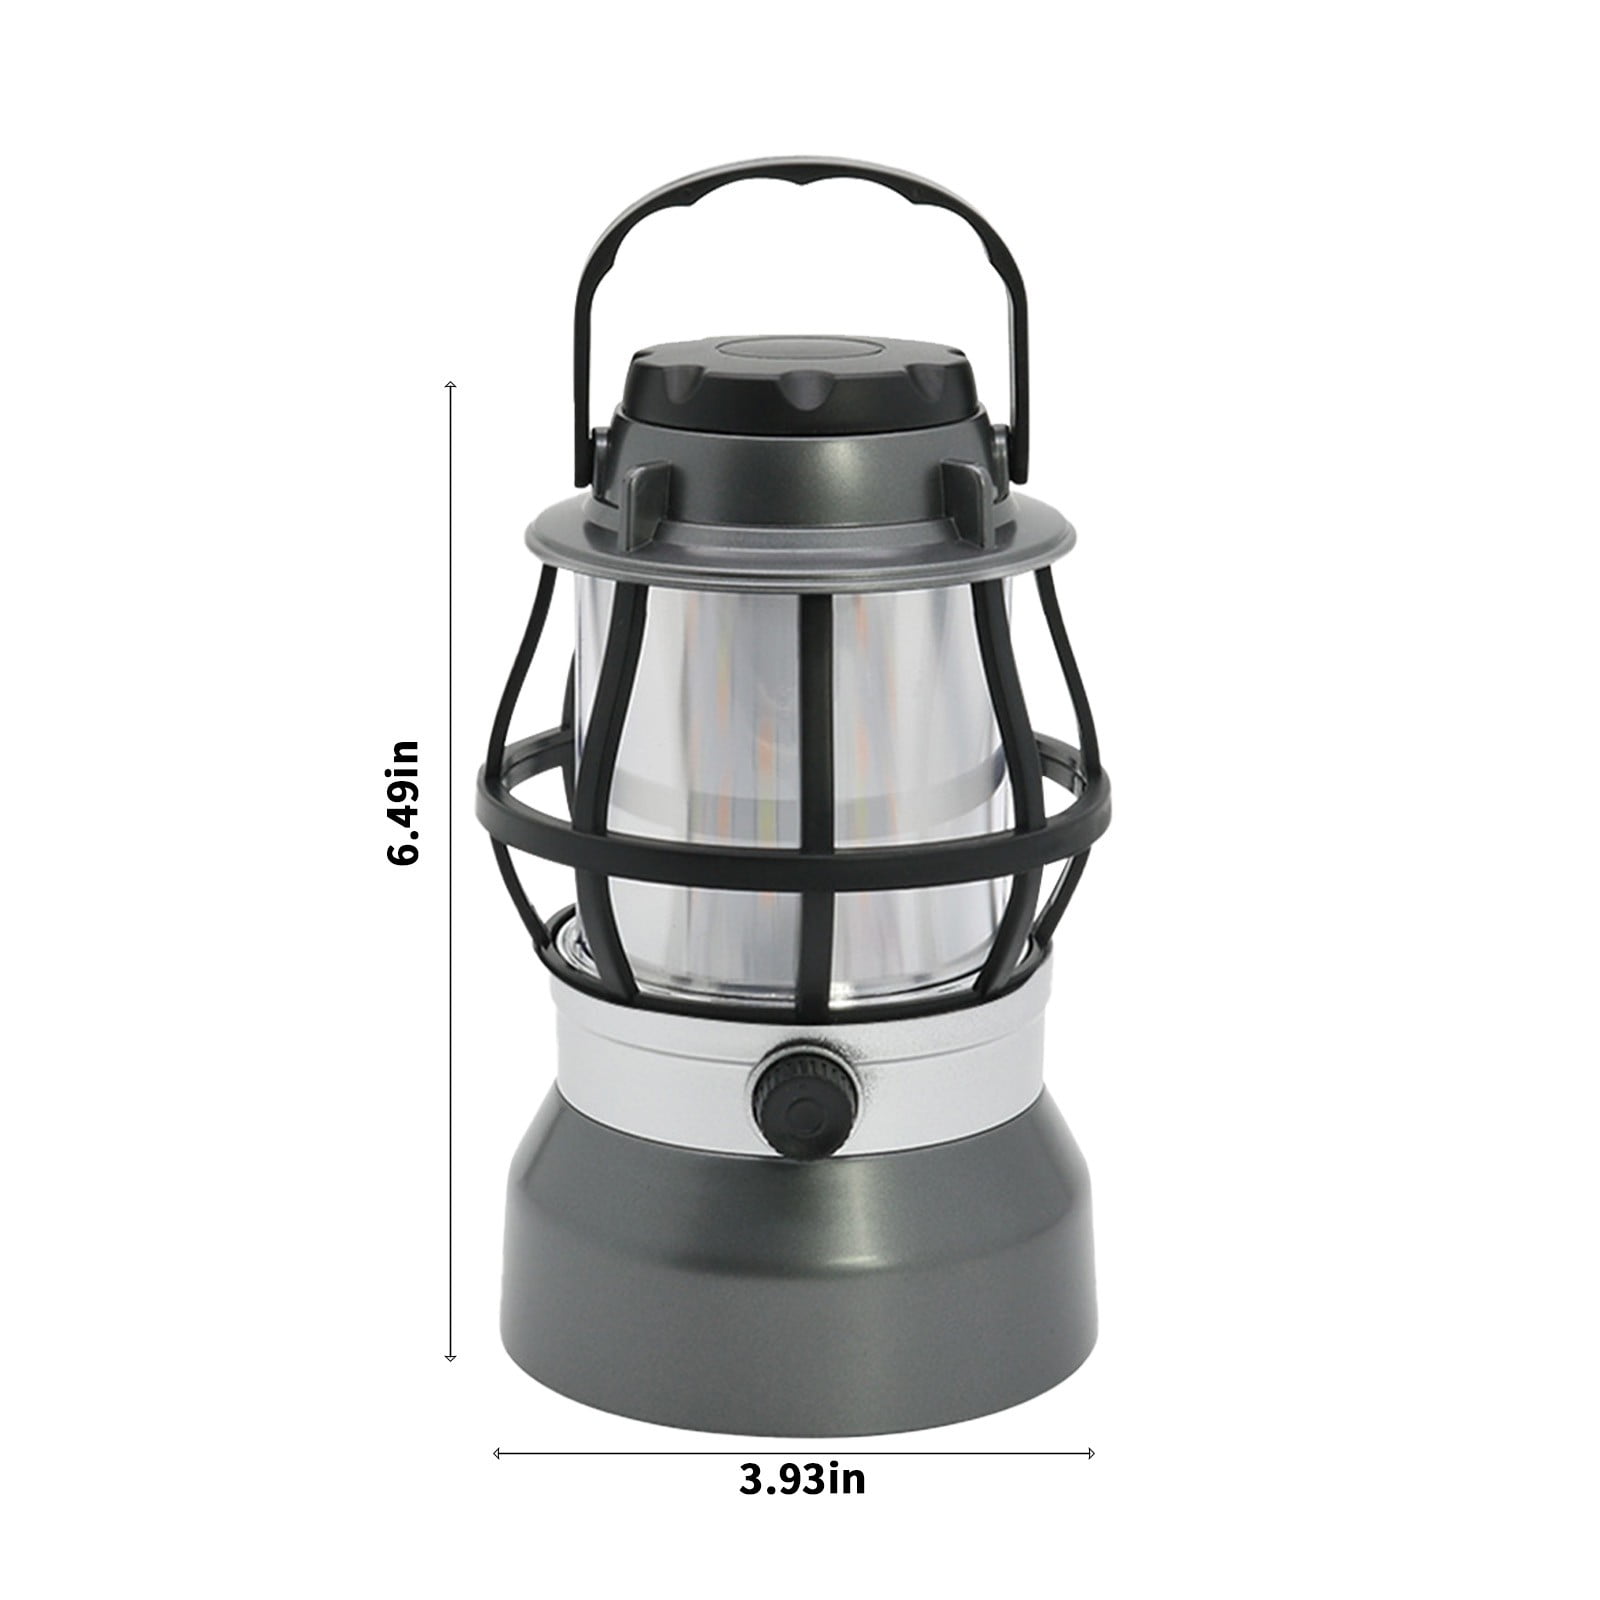 Sportsman® Essentials 3D LED Camping Lantern